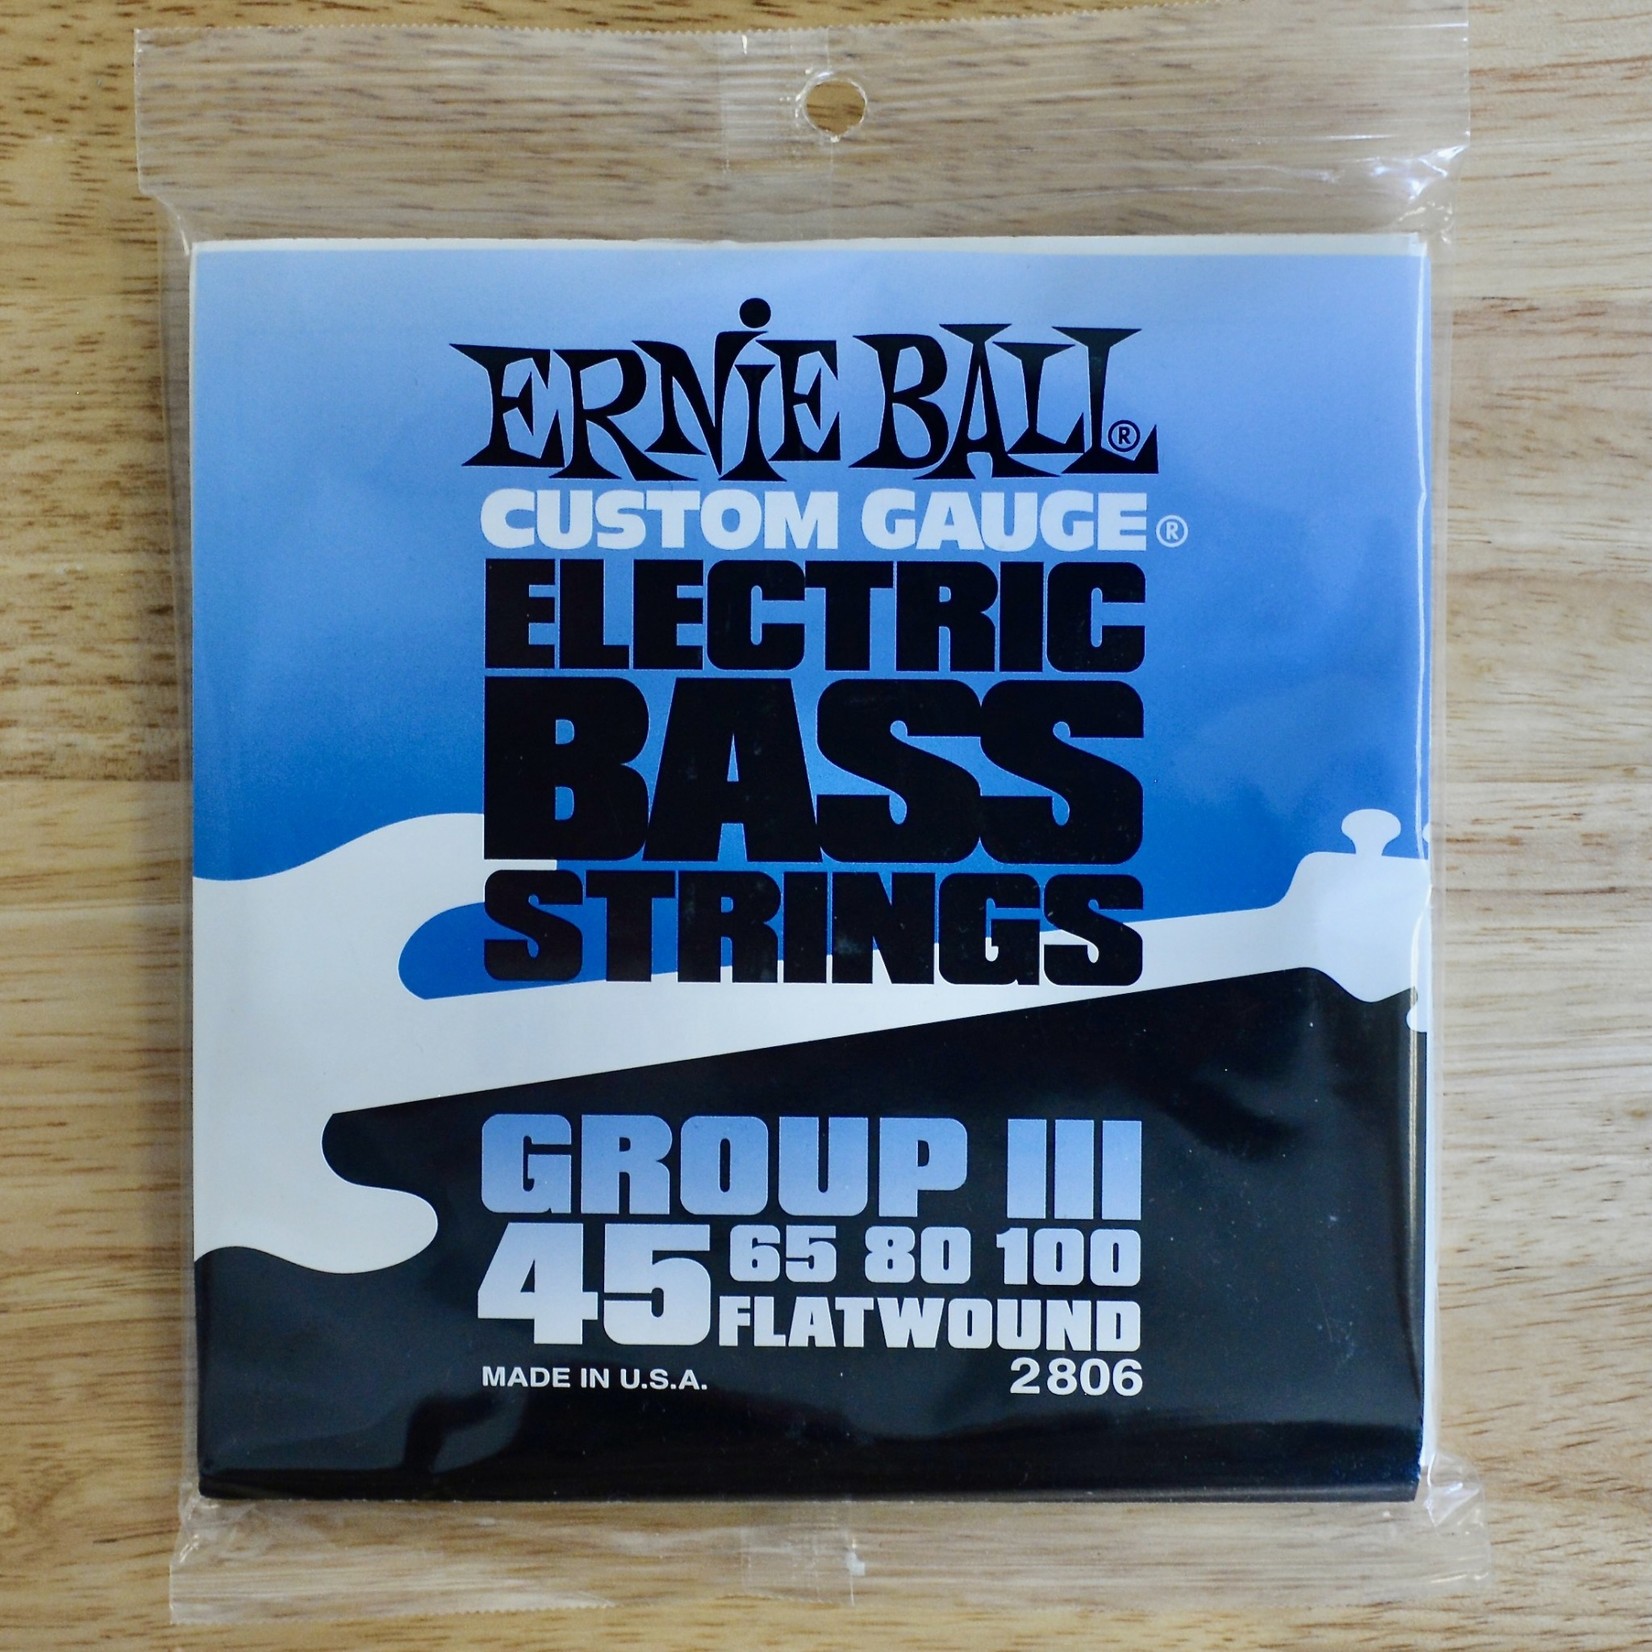 Ernie Ball Ernie Ball Electric Bass Strings Group III Flatwound